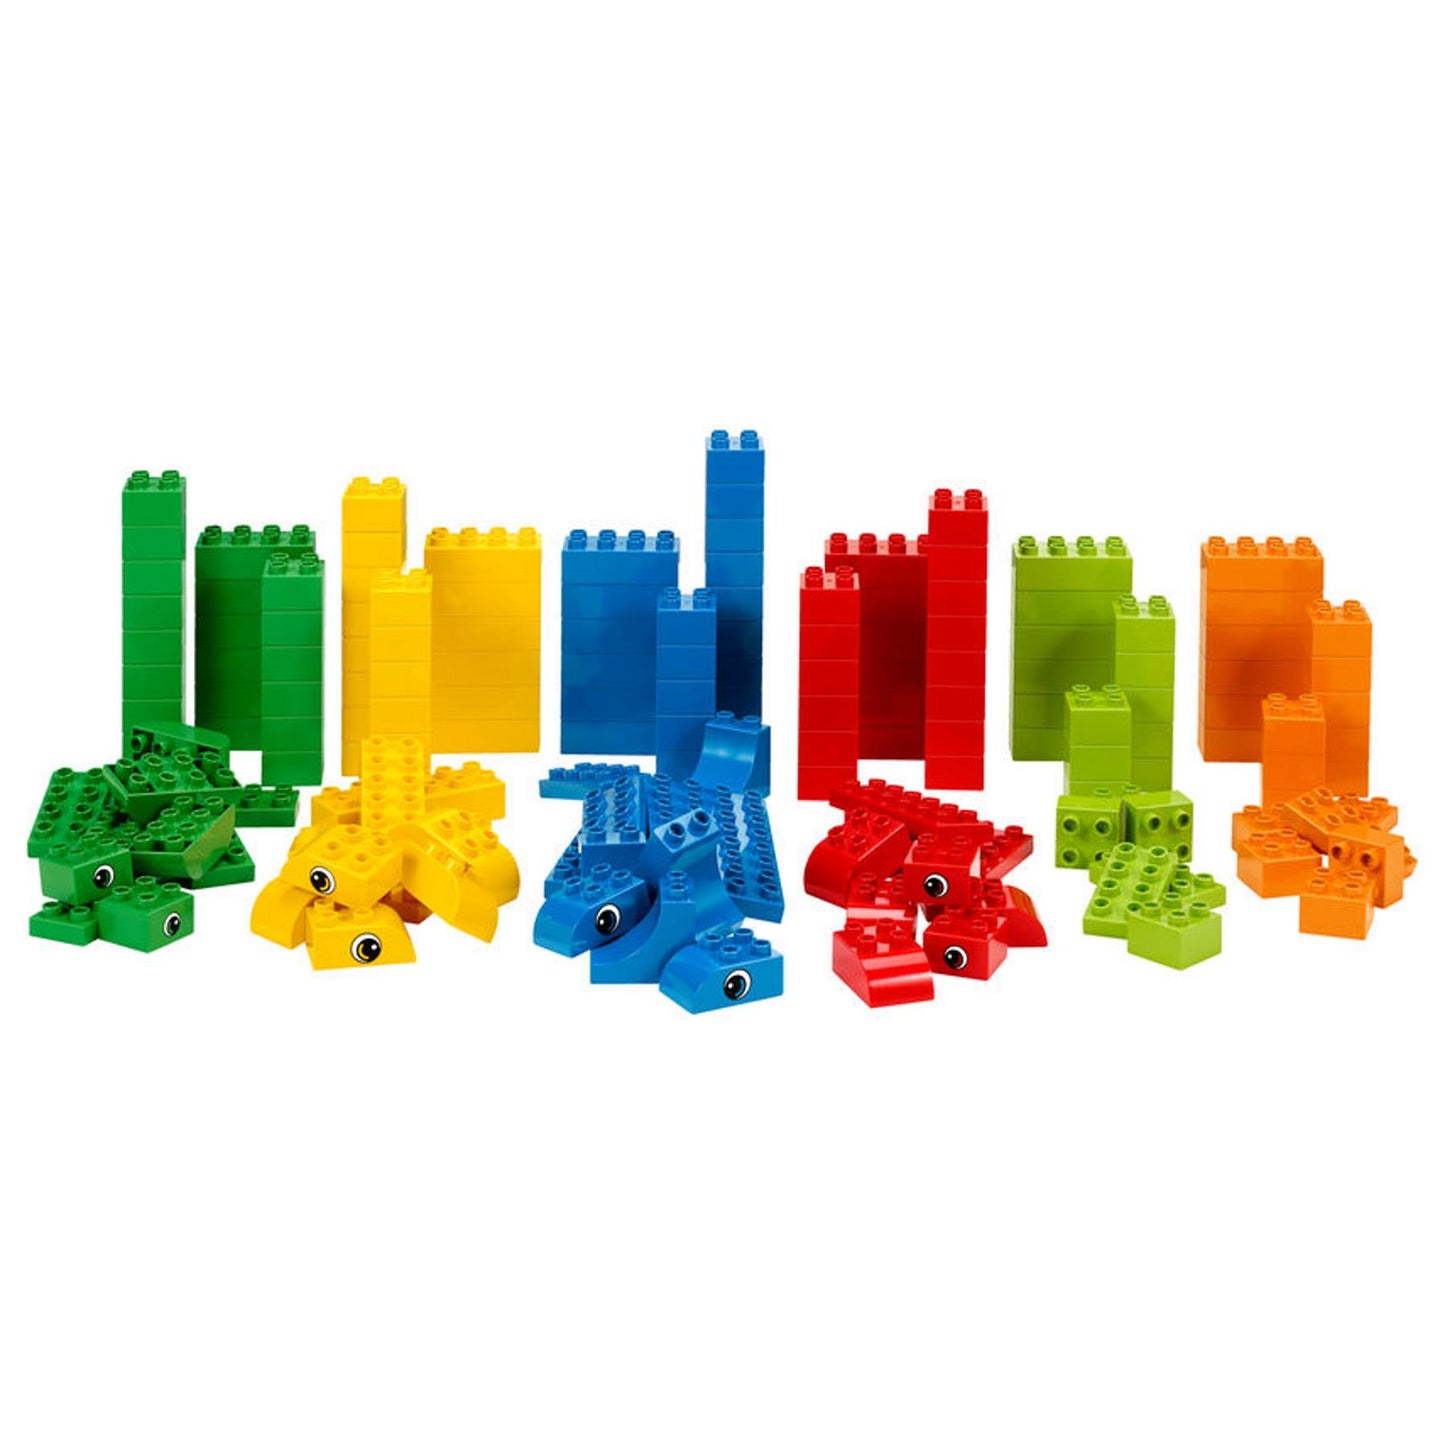 LEGO® education Creative LEGO® DUPLO® Brick Set -160 pieces